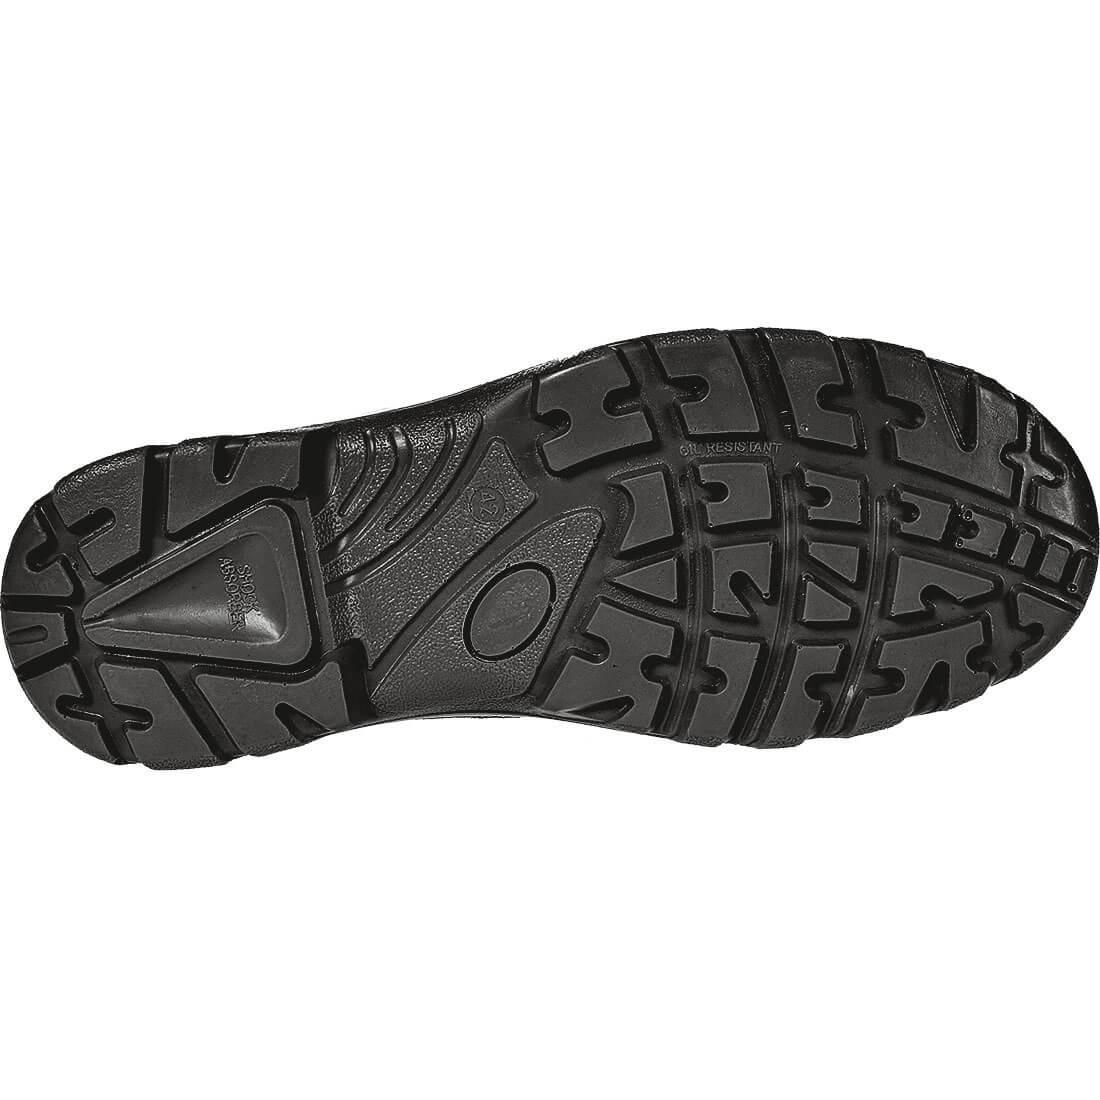 Portwest ESD Leather Non Metallic Low Cut Safety Shoe S1 Toe Cap Black FC02